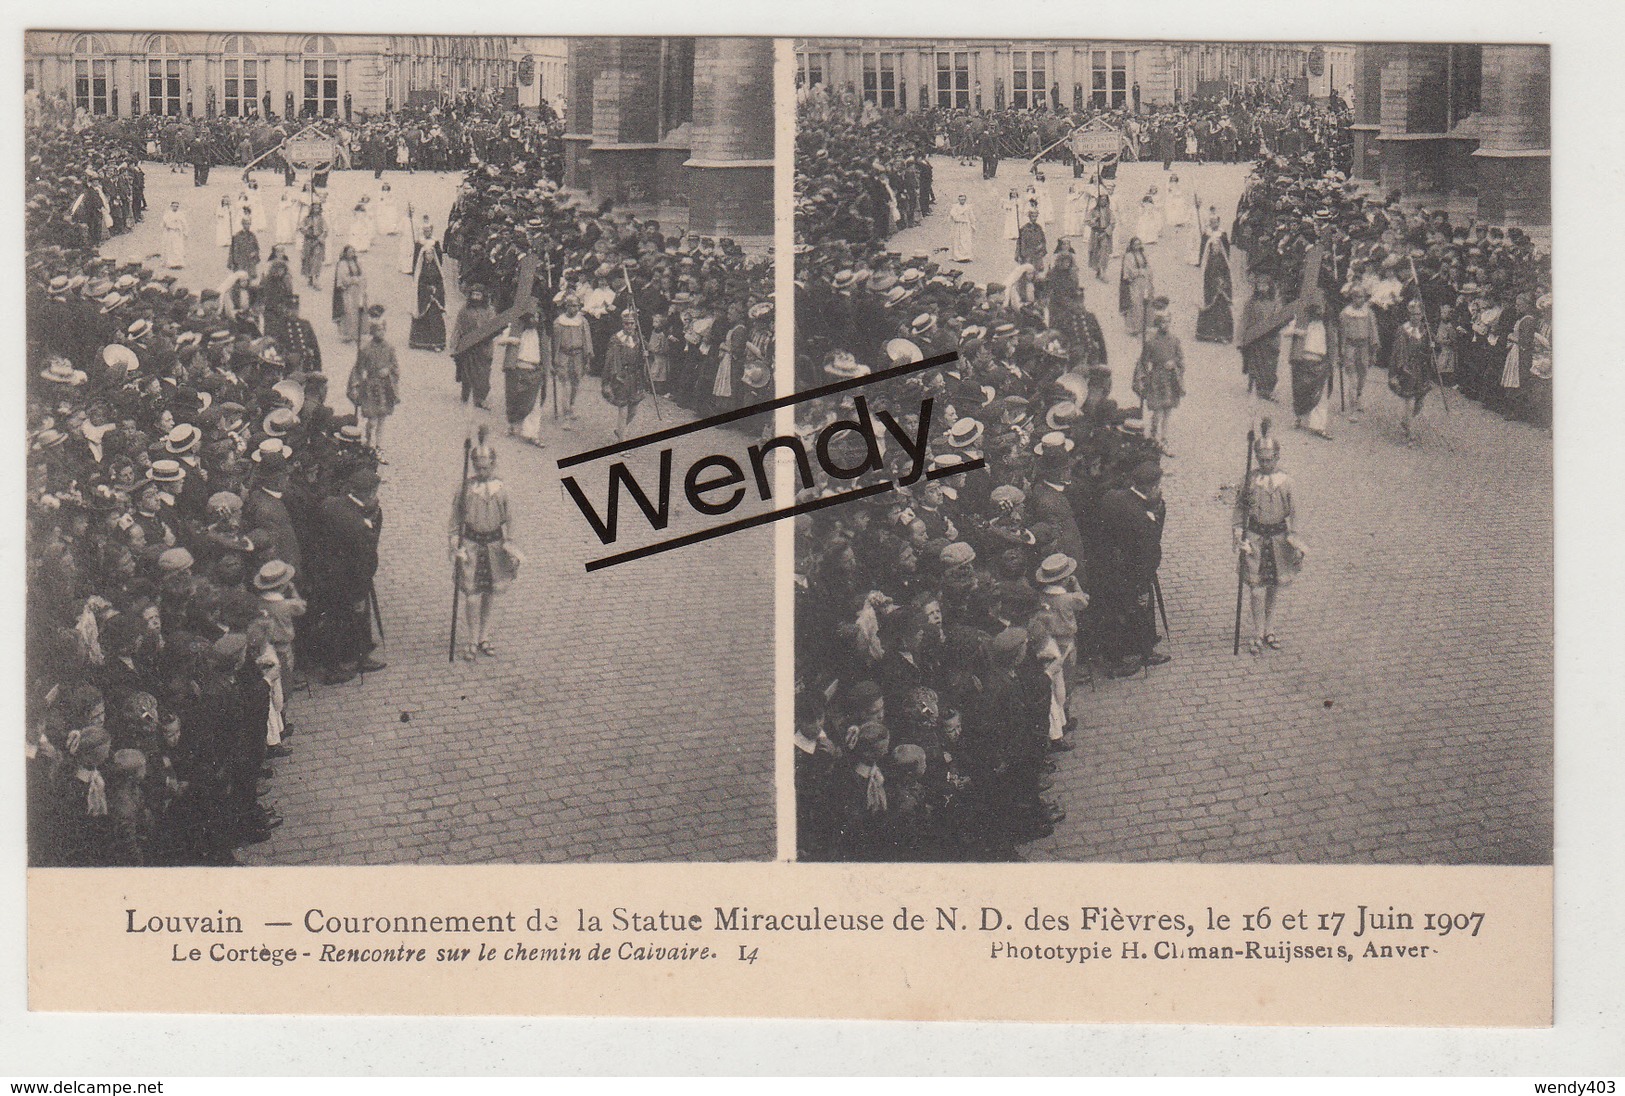 Leuven (10 kaarten stéréoscopiques 1907 couronnement)